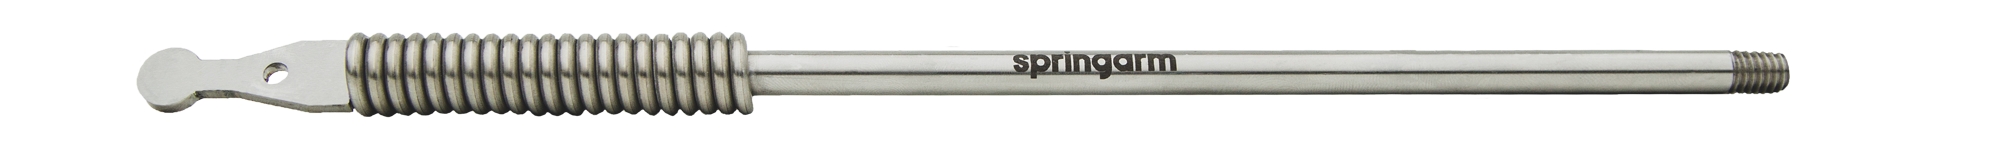 Springarm, flexible water trough arms